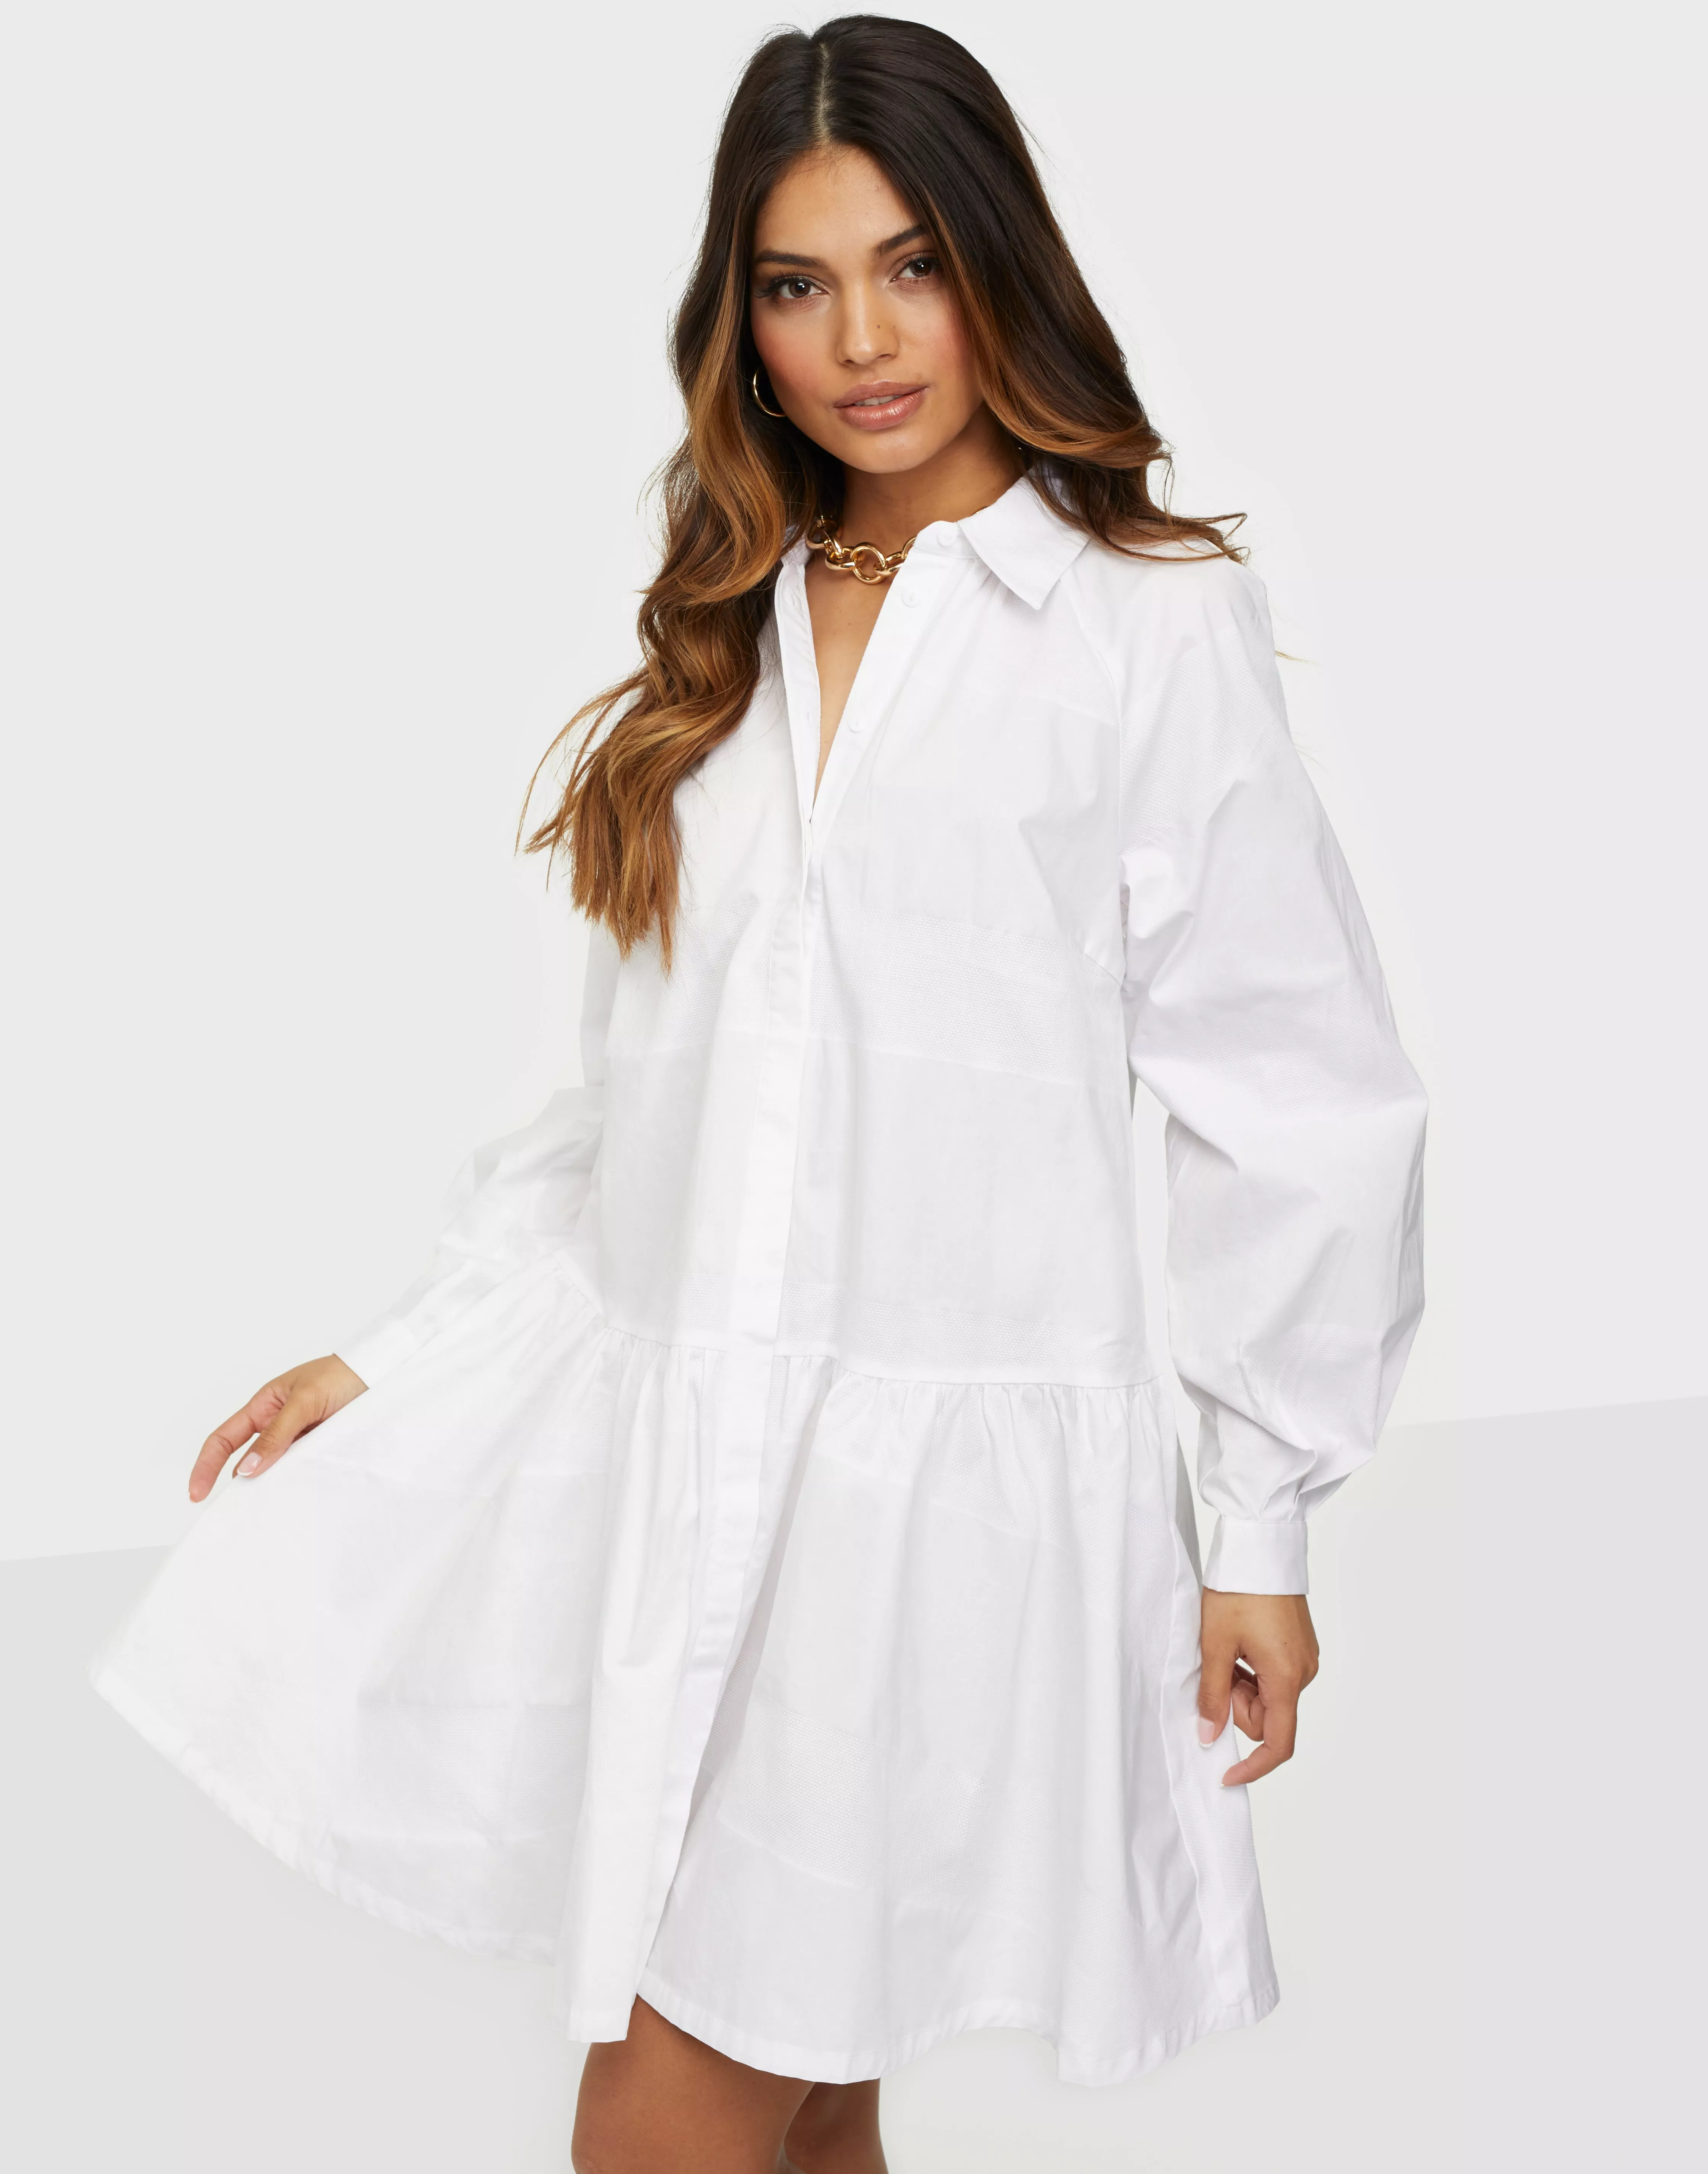 LS Y.A.S Buy - SHIRT White YASSCORPIO S. - Bright DRESS ICON